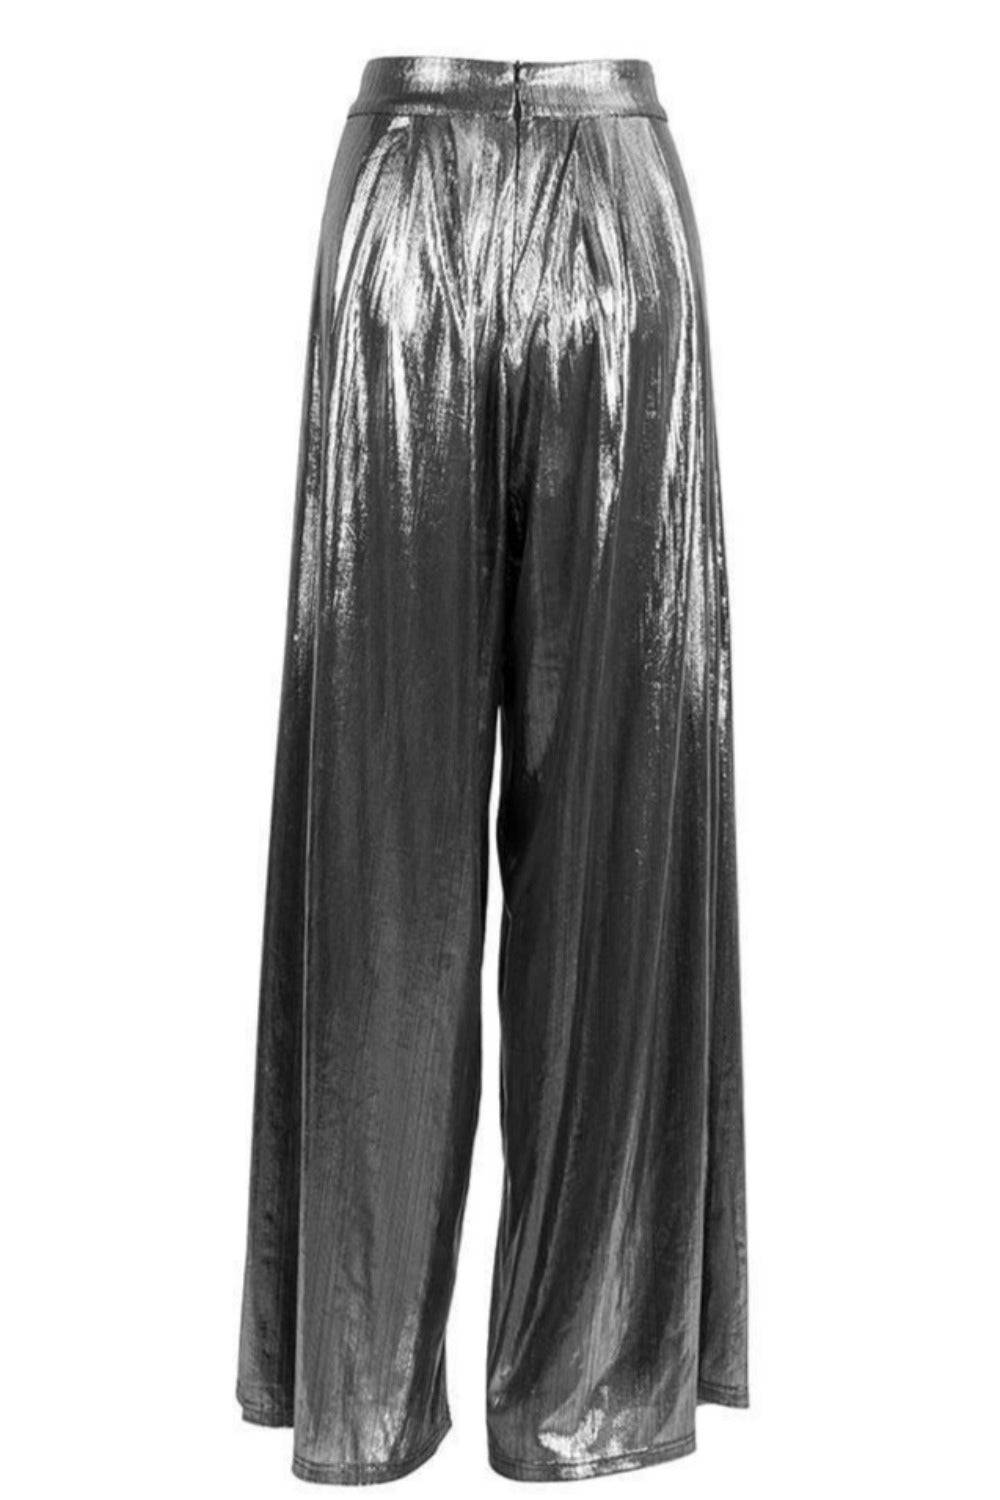 Silver Metallic High Waisted Wide Leg Palazzo Pants - TGC Boutique - Pants